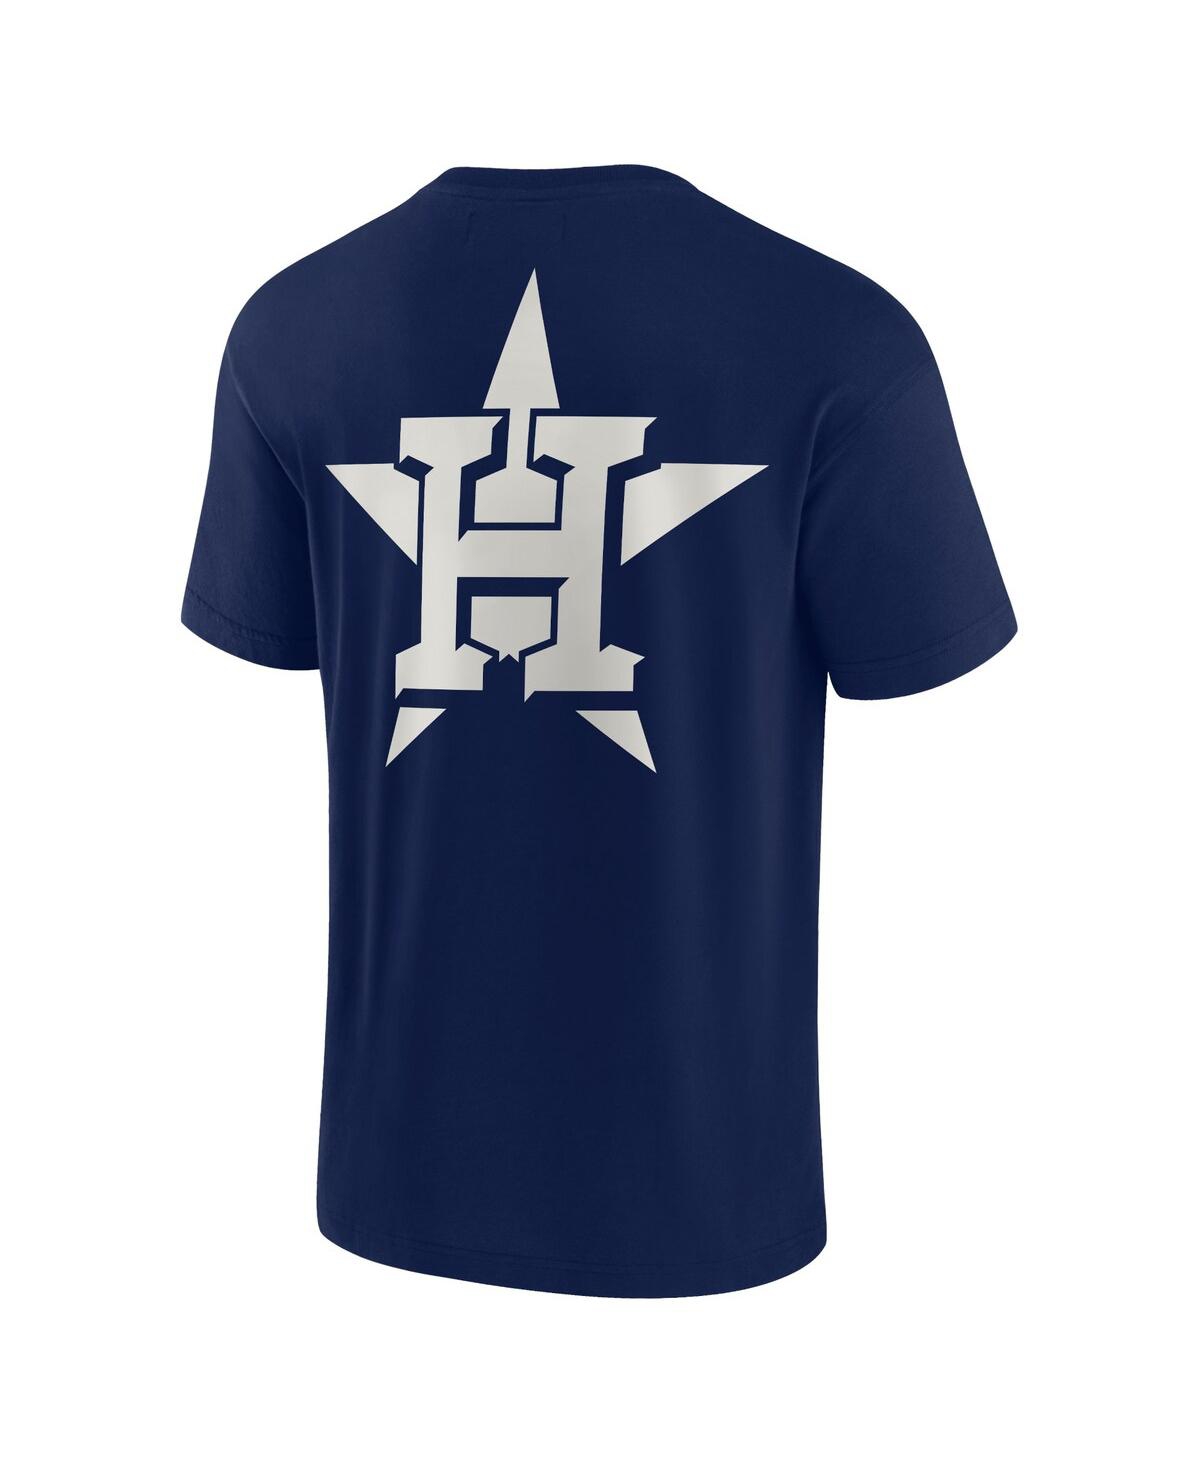 Shop Fanatics Signature Men's And Women's  Navy Houston Astros Super Soft Short Sleeve T-shirt